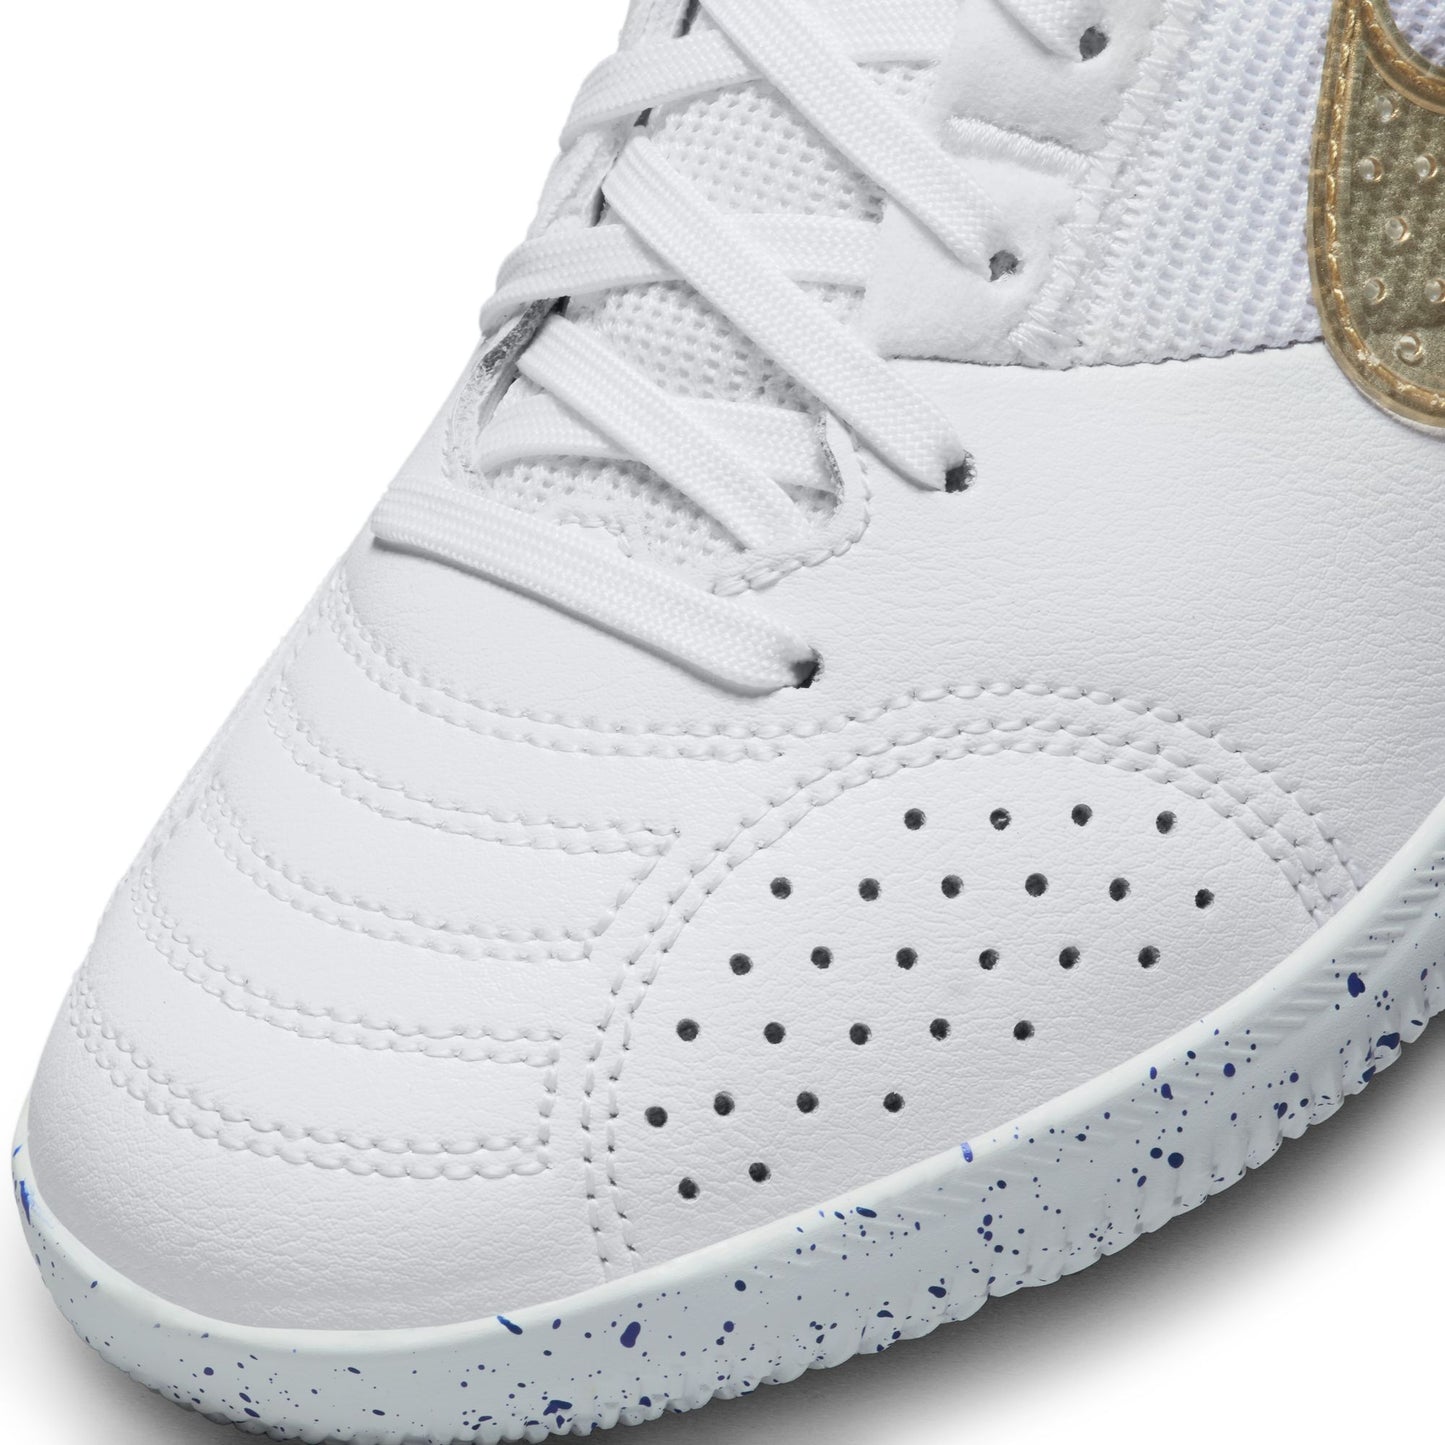 Junior Nike Streetgato IC [White/Gold/Royal]